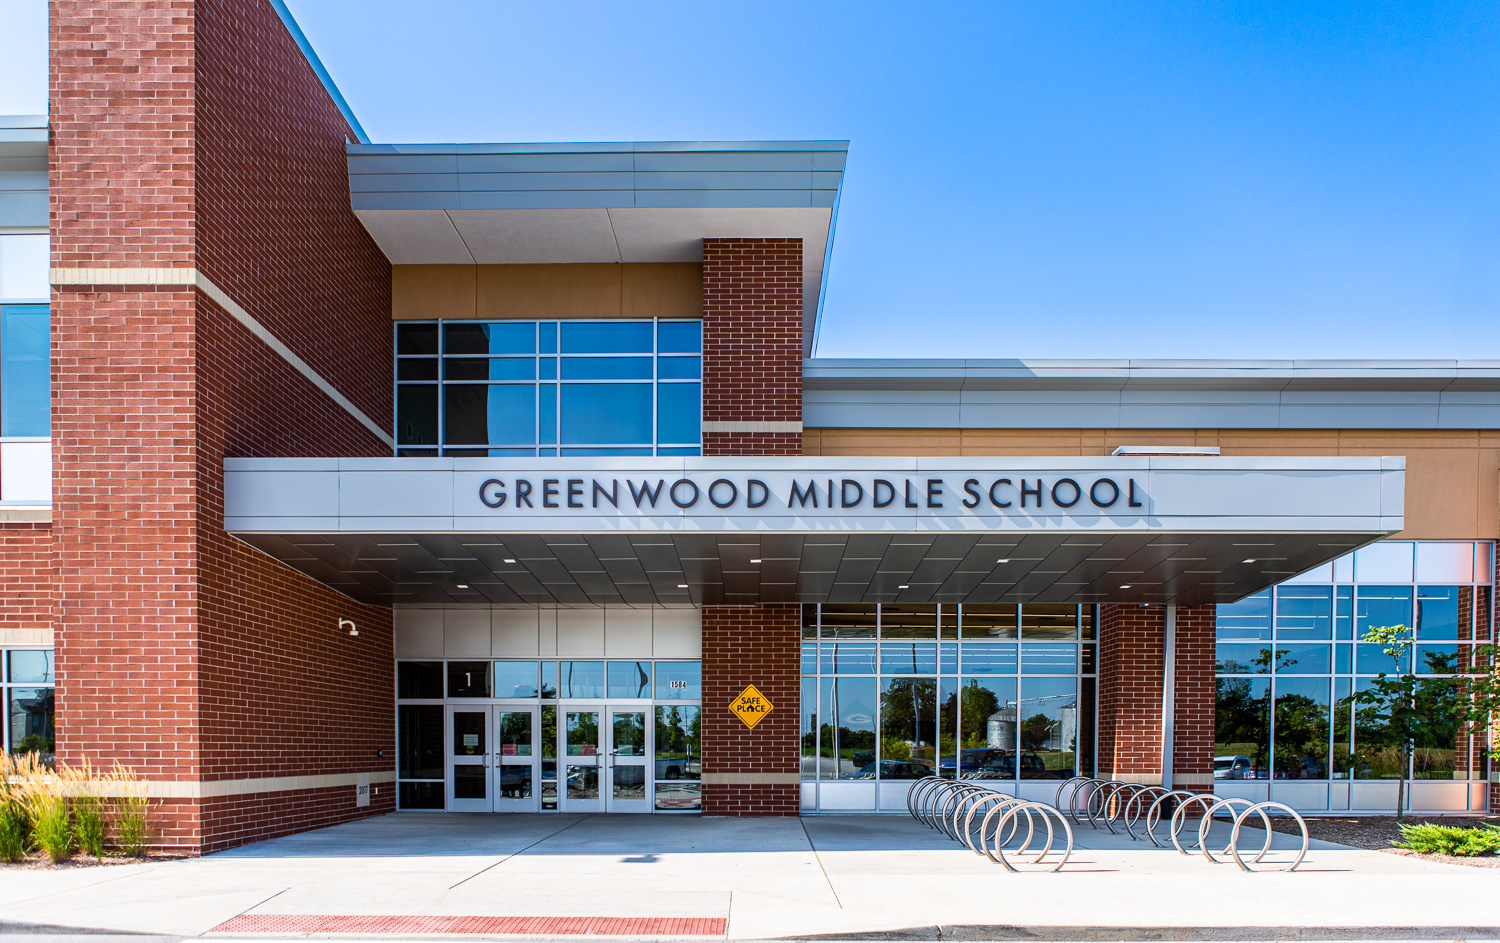 Greenwood Middle School: Greenwood Community School Corporation